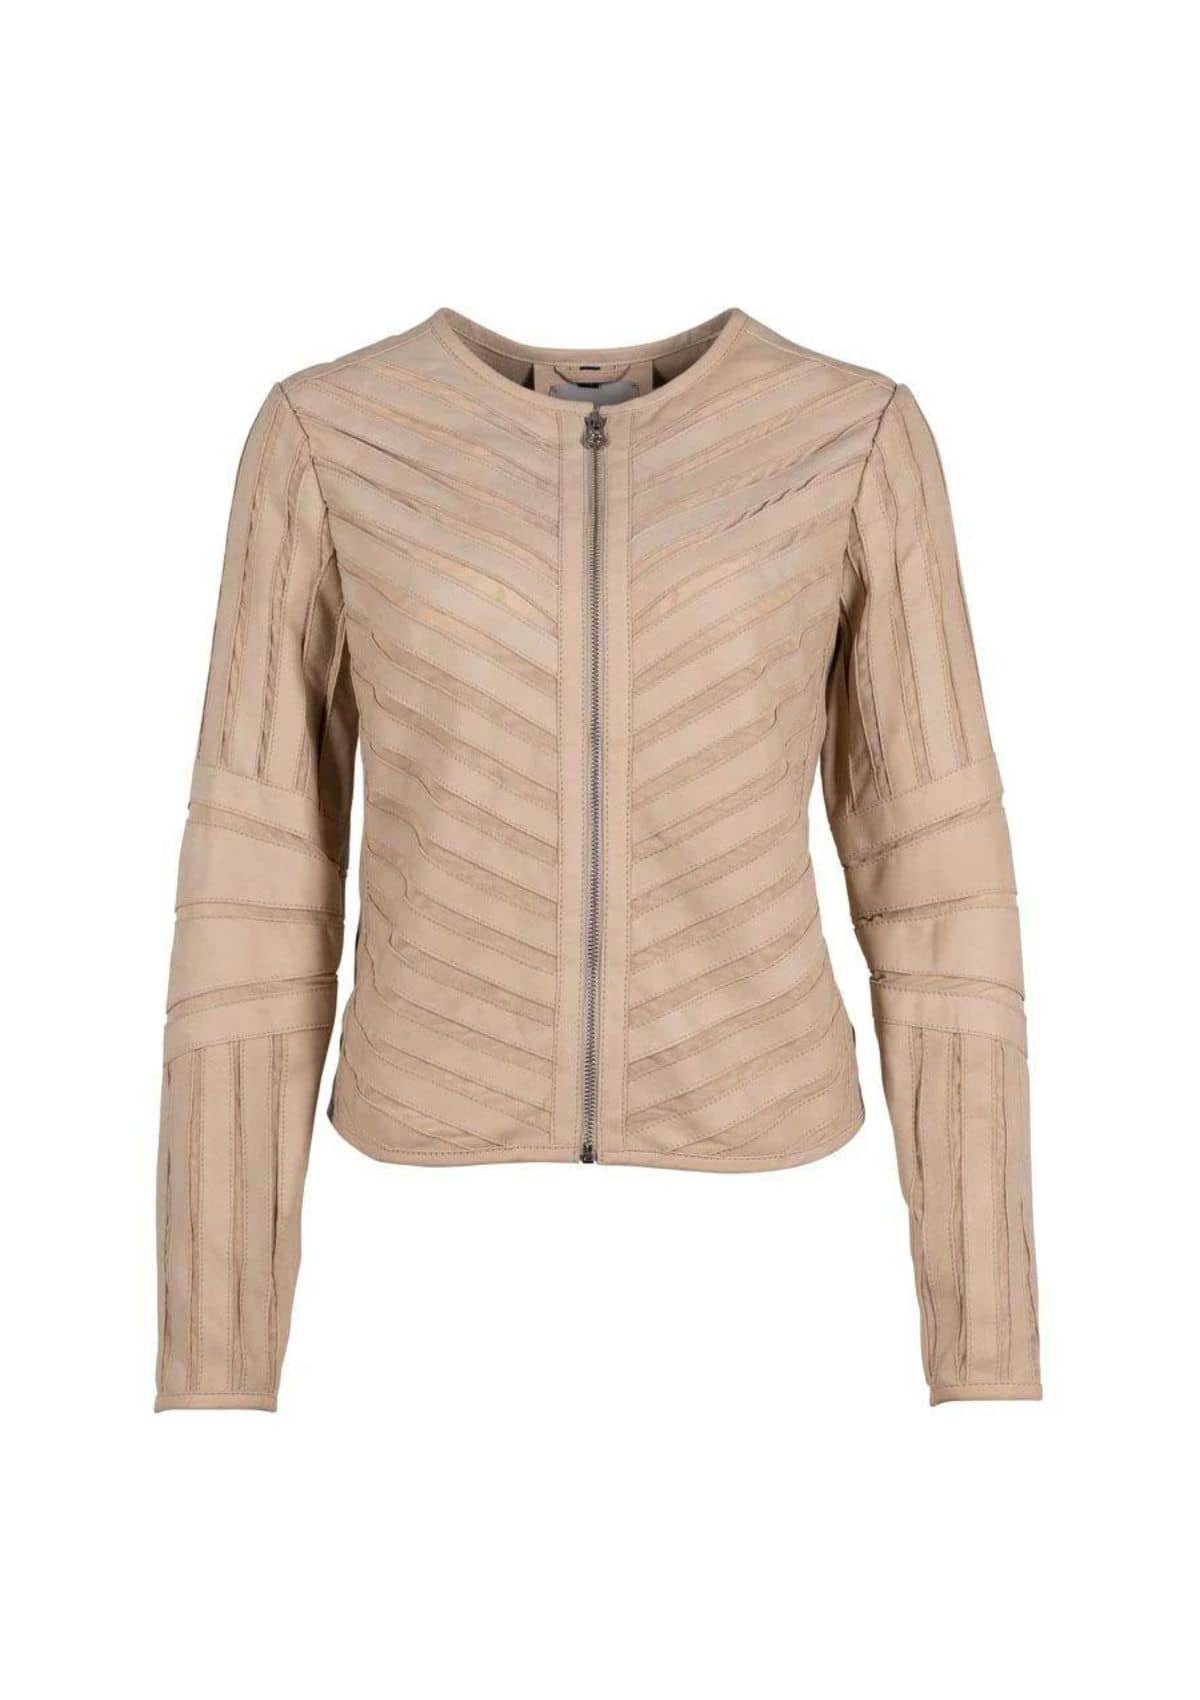 Tila Intertwined Mesh Design Leather Jacket - Beige -Mauritius GmbH Int. Fashion- Ruby Jane-